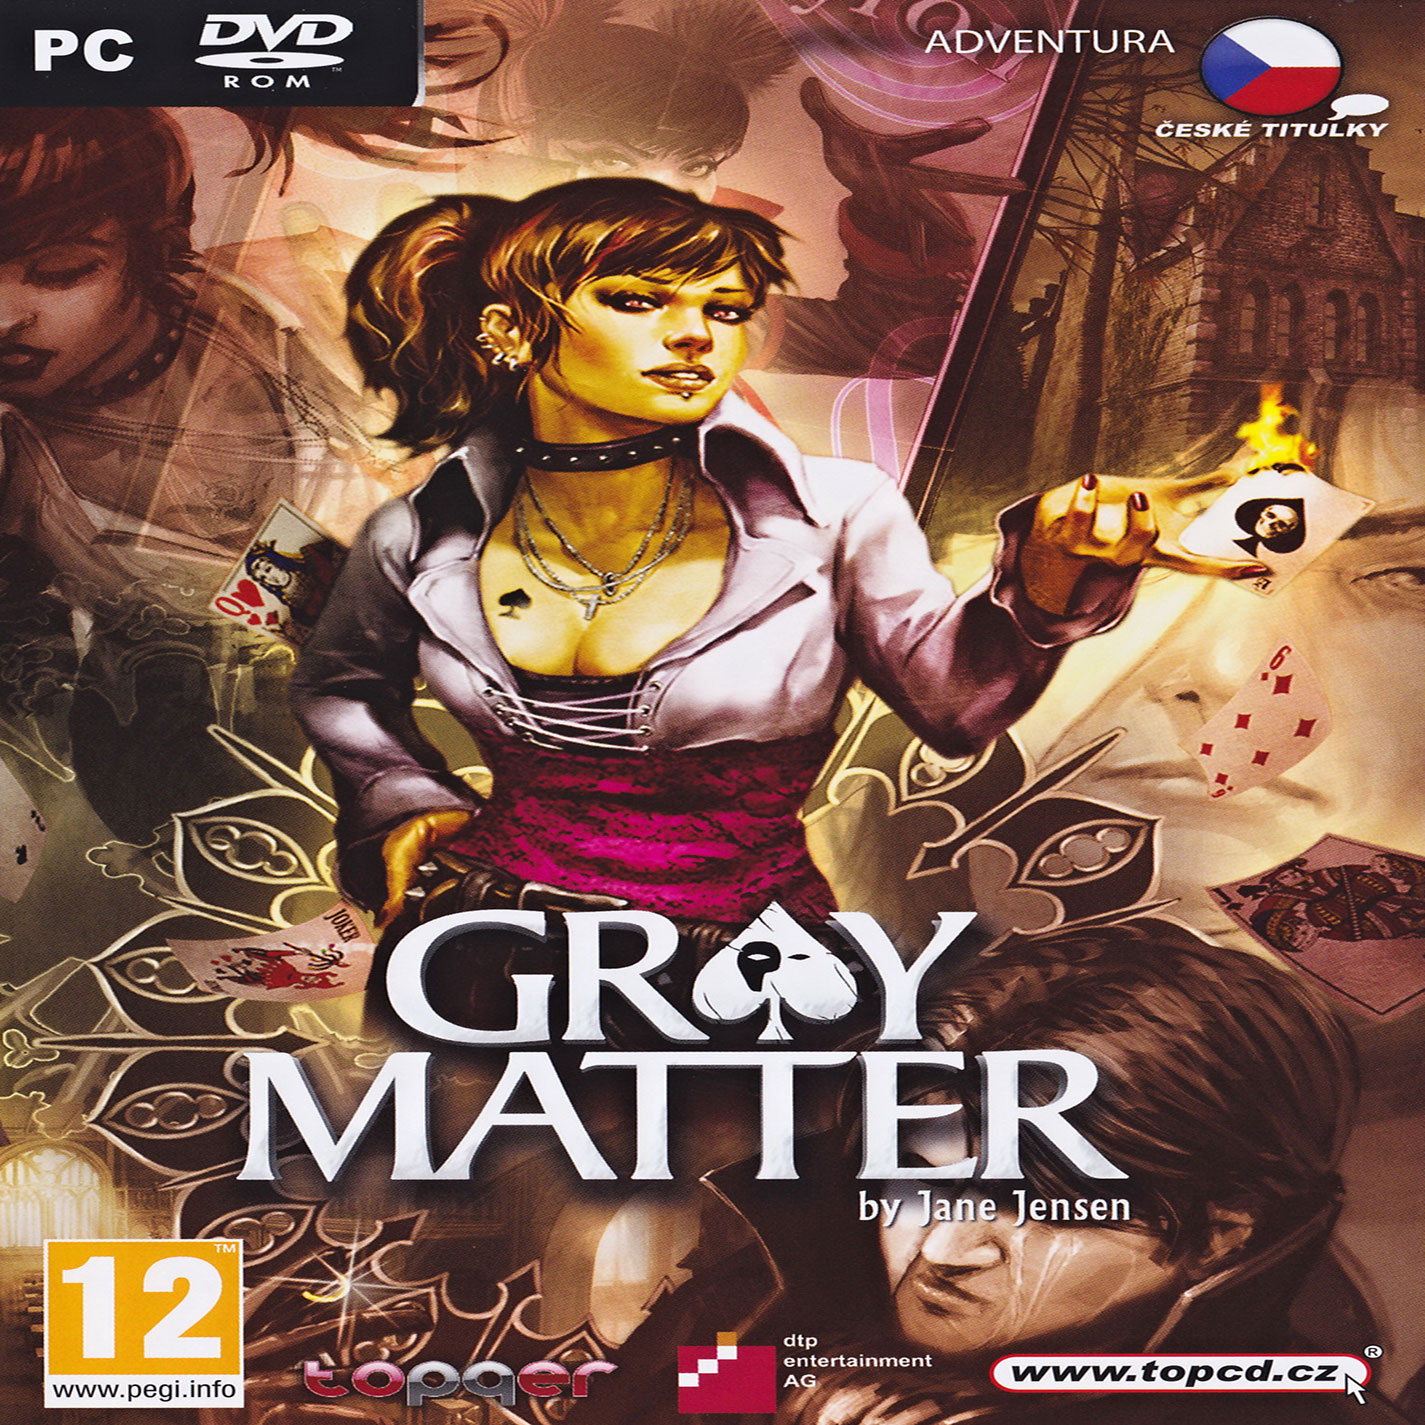 Gray Matter - pedn CD obal